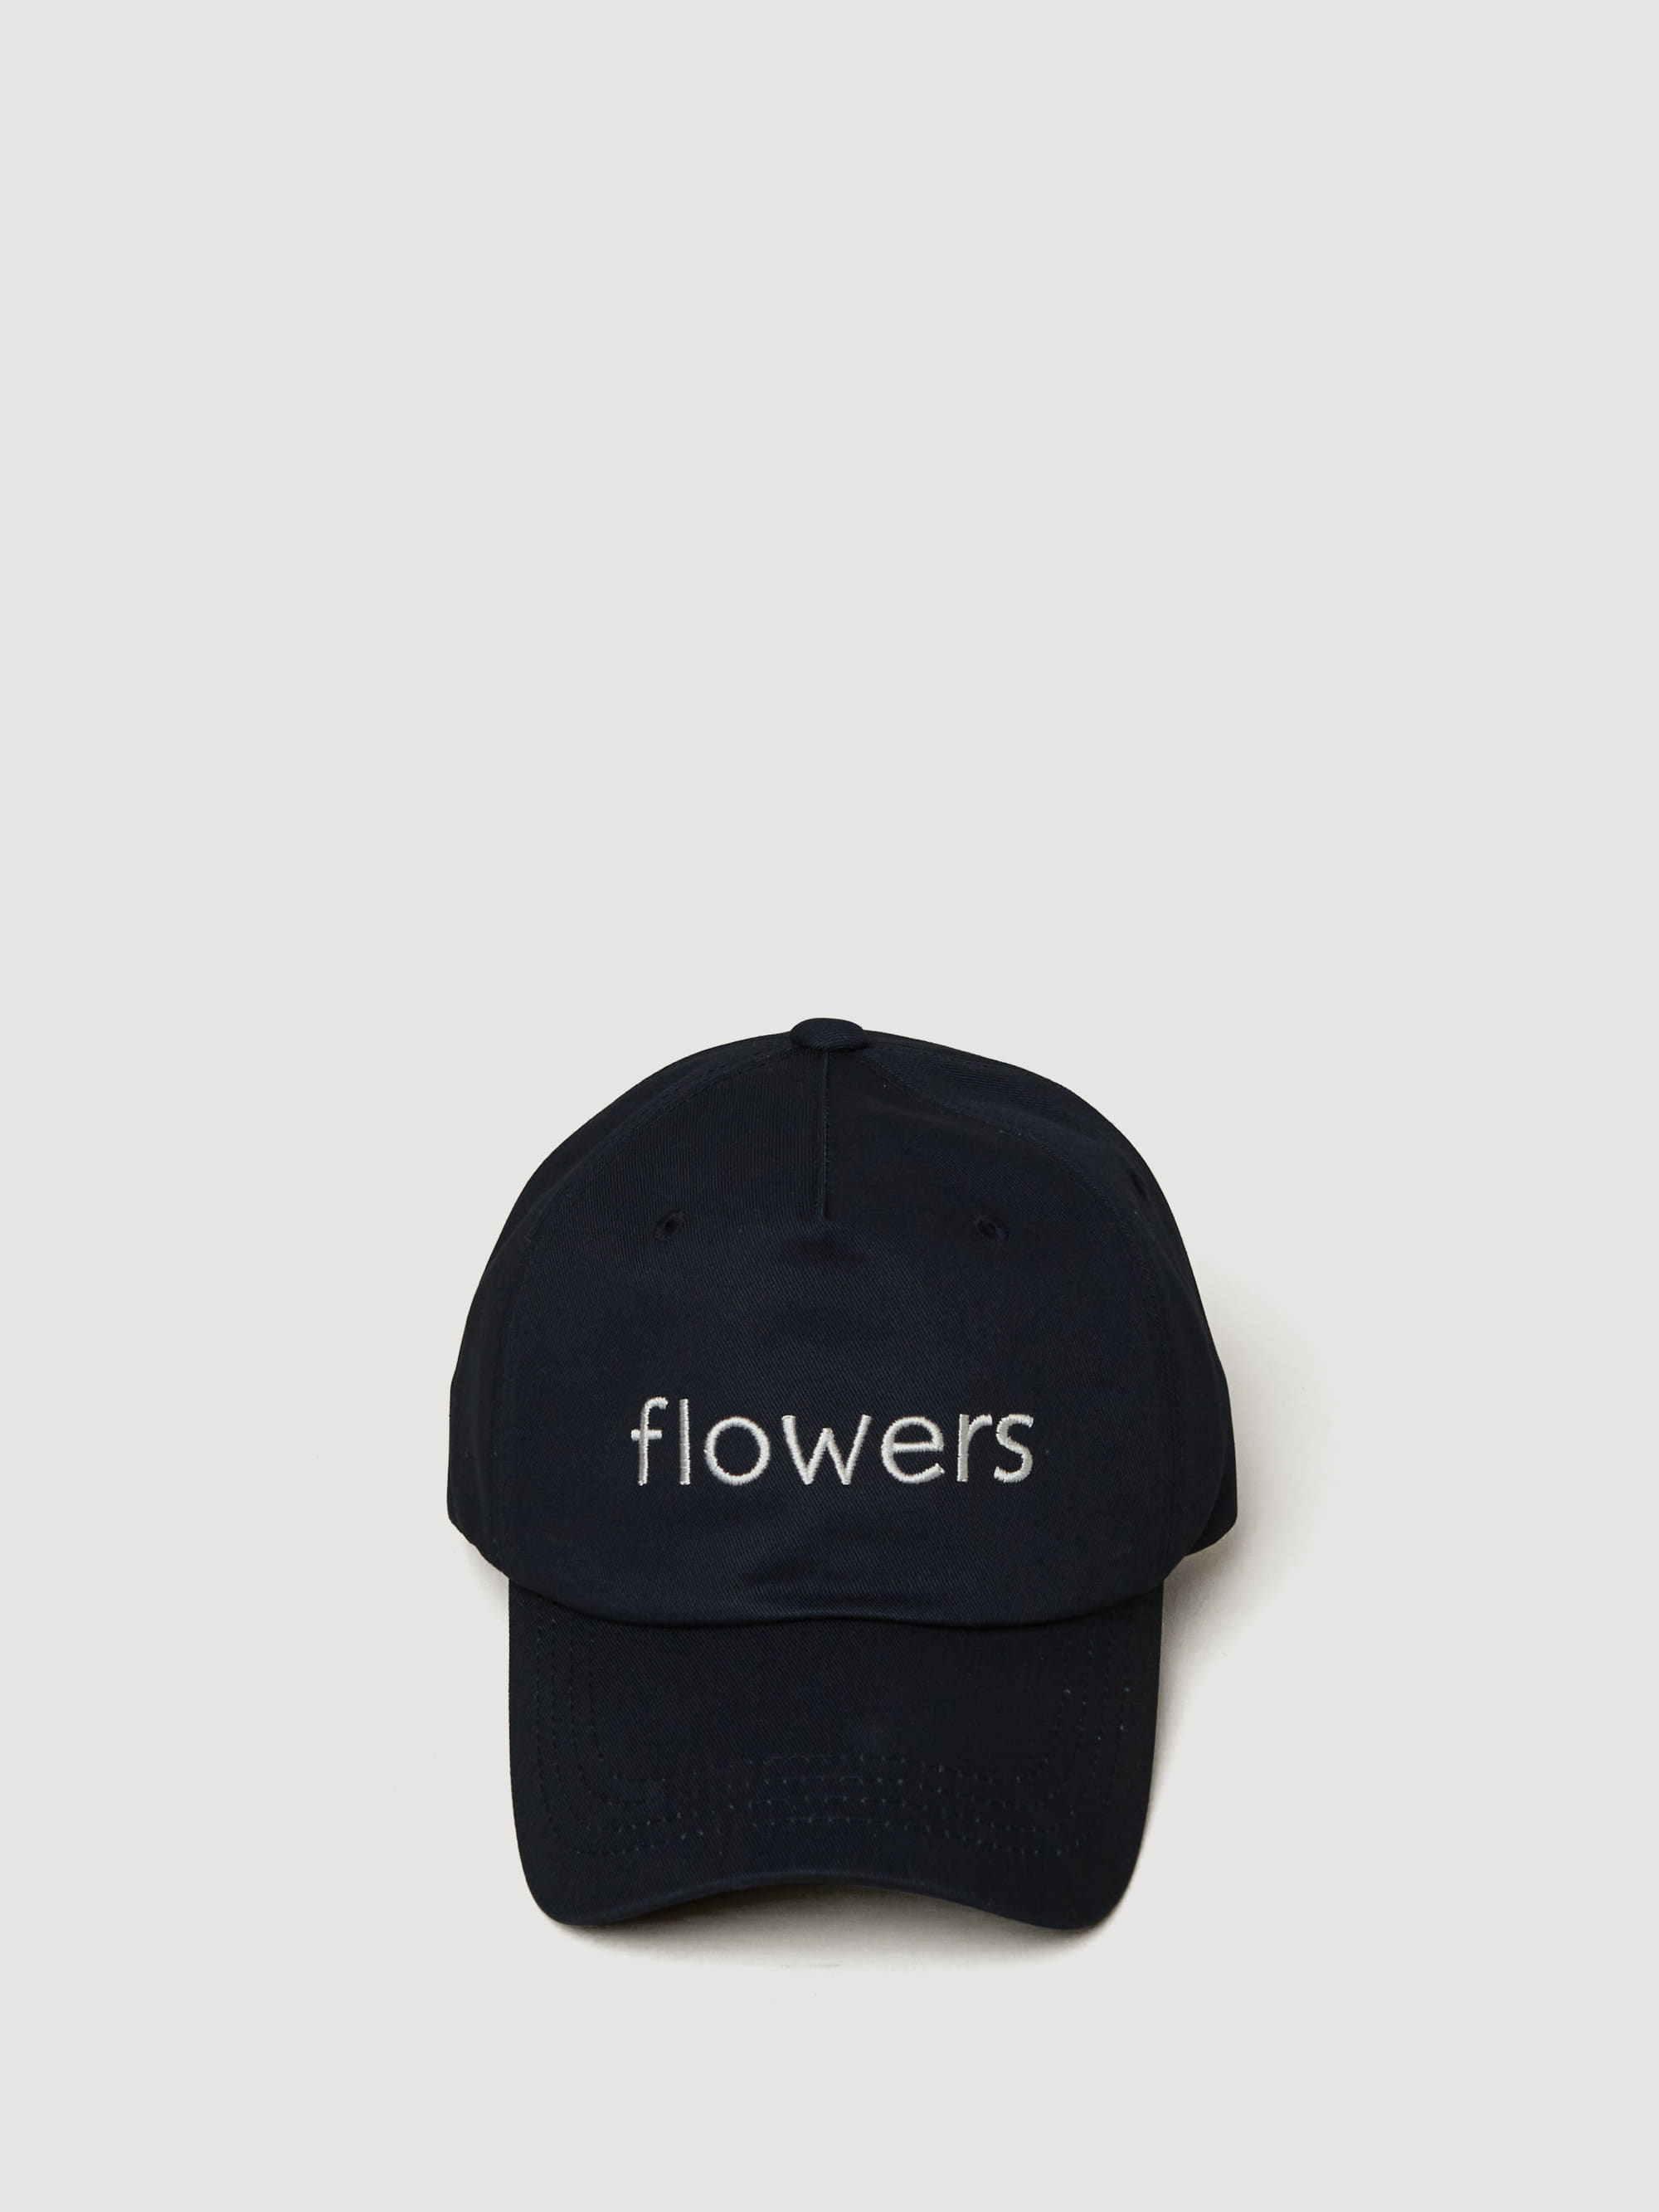 FLOWERS BALL CAP IN NAVY